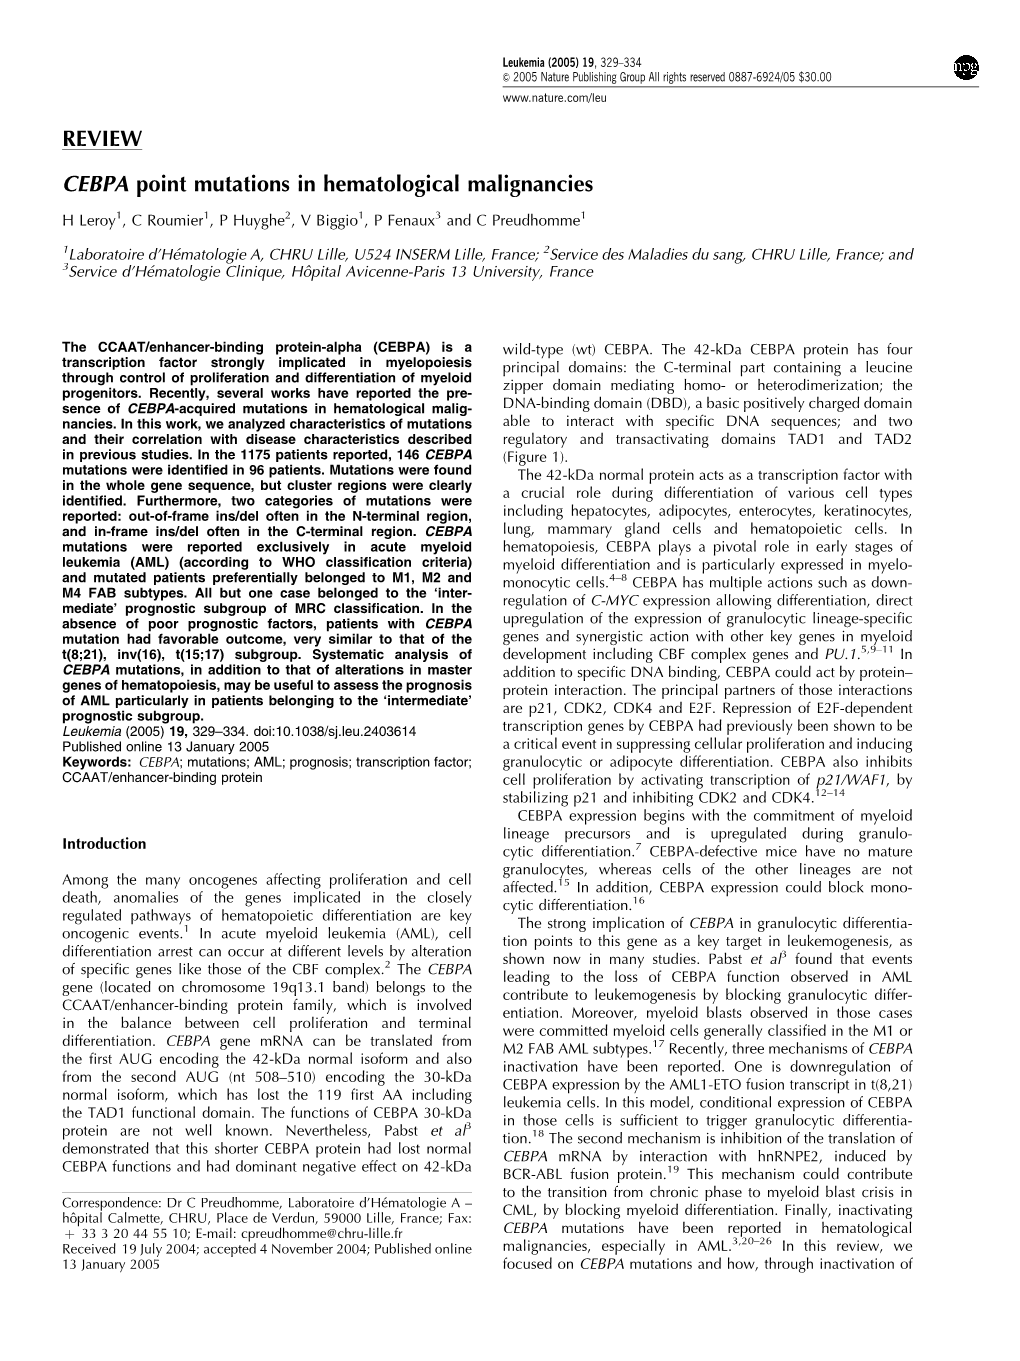 REVIEW CEBPA Point Mutations in Hematological Malignancies